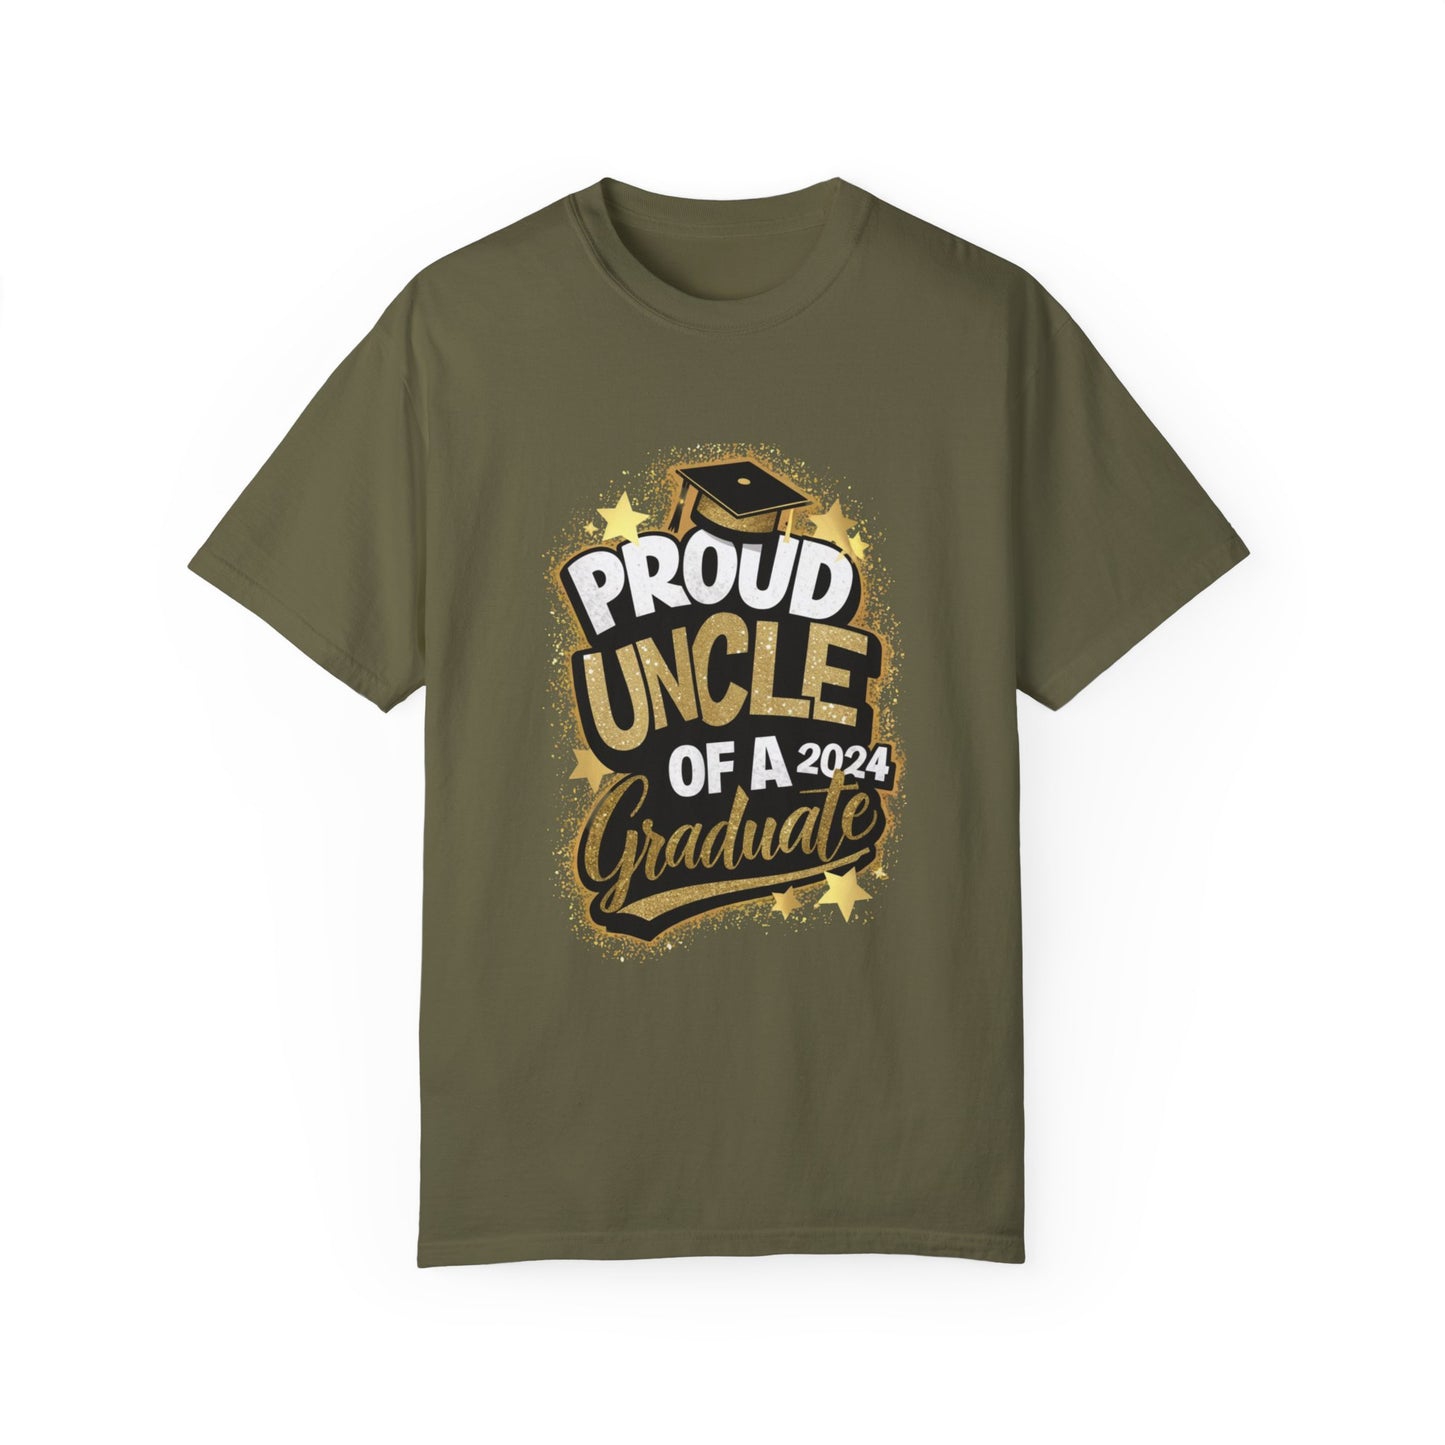 Proud Uncle of a 2024 Graduate Unisex Garment-dyed T-shirt Cotton Funny Humorous Graphic Soft Premium Unisex Men Women Sage T-shirt Birthday Gift-13